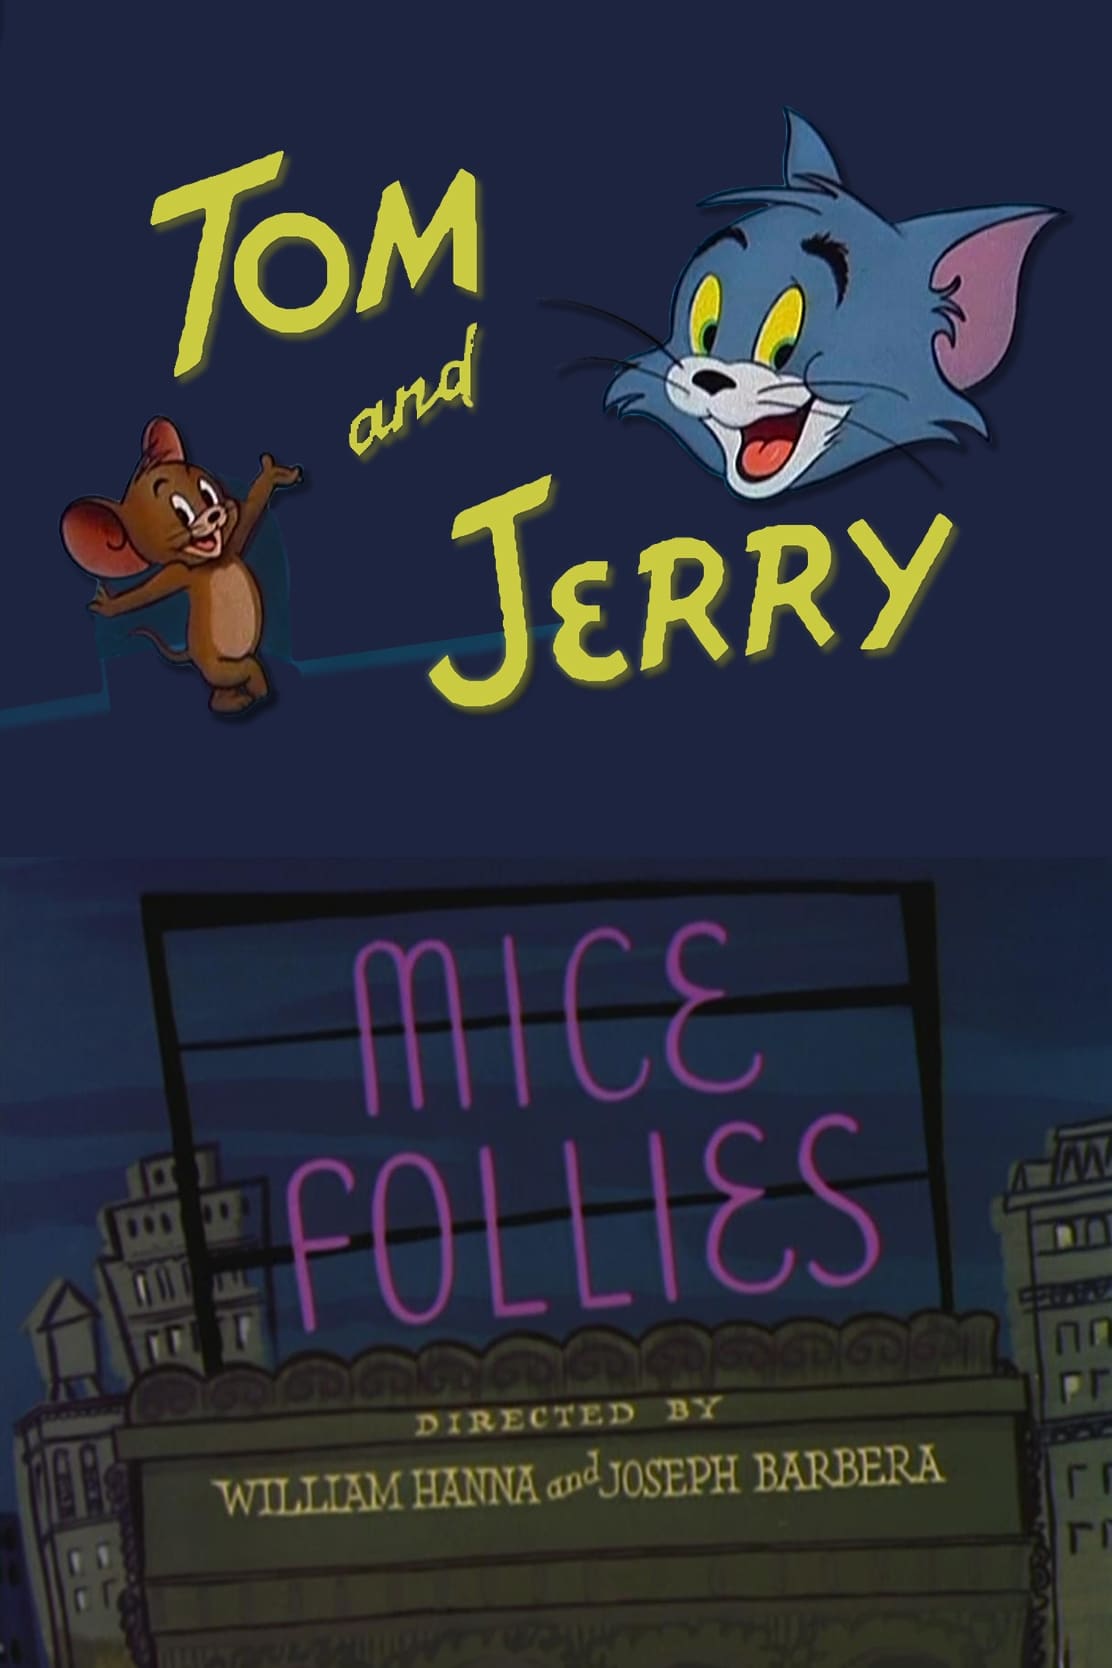 Mice Follies (1954)